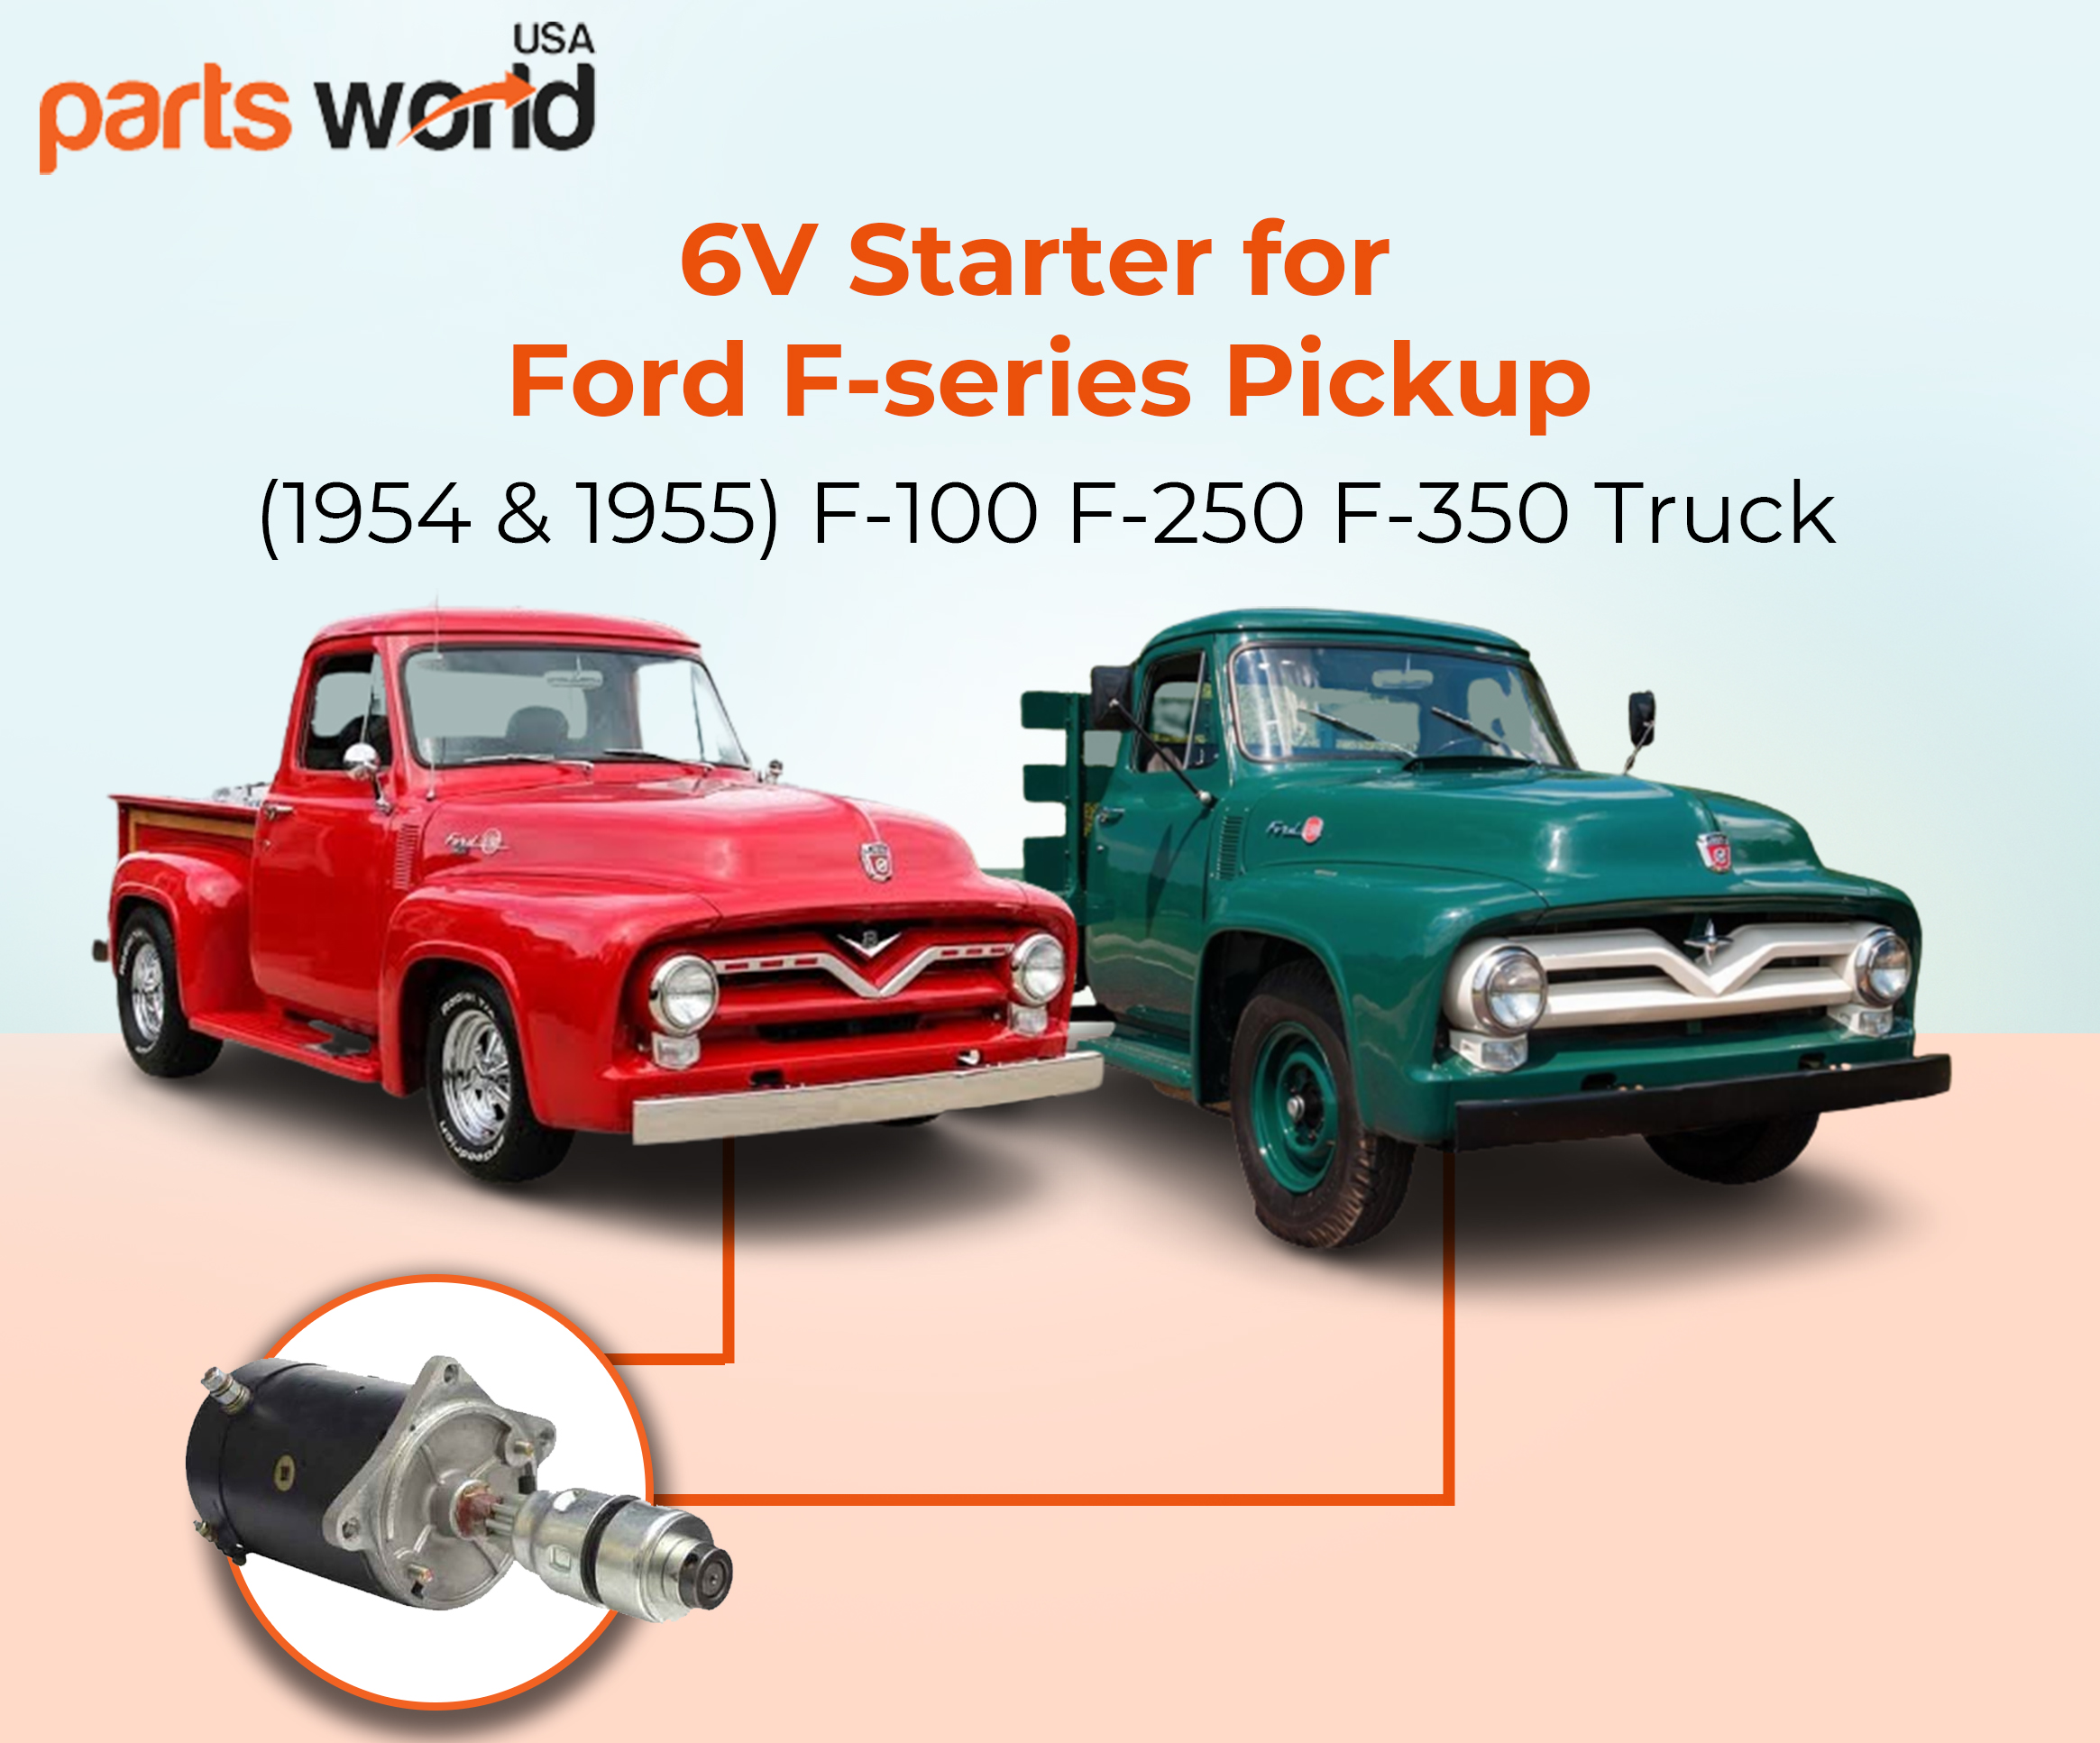 6V Starter for Ford F-100 F-250 F350 Truck (1954 & 1955) F-series Pickups B5C-11002A, C3NF-11001-A, C3NF-11002-D/DR, FAG-11002/G/HM, FAC-11001H/M/P